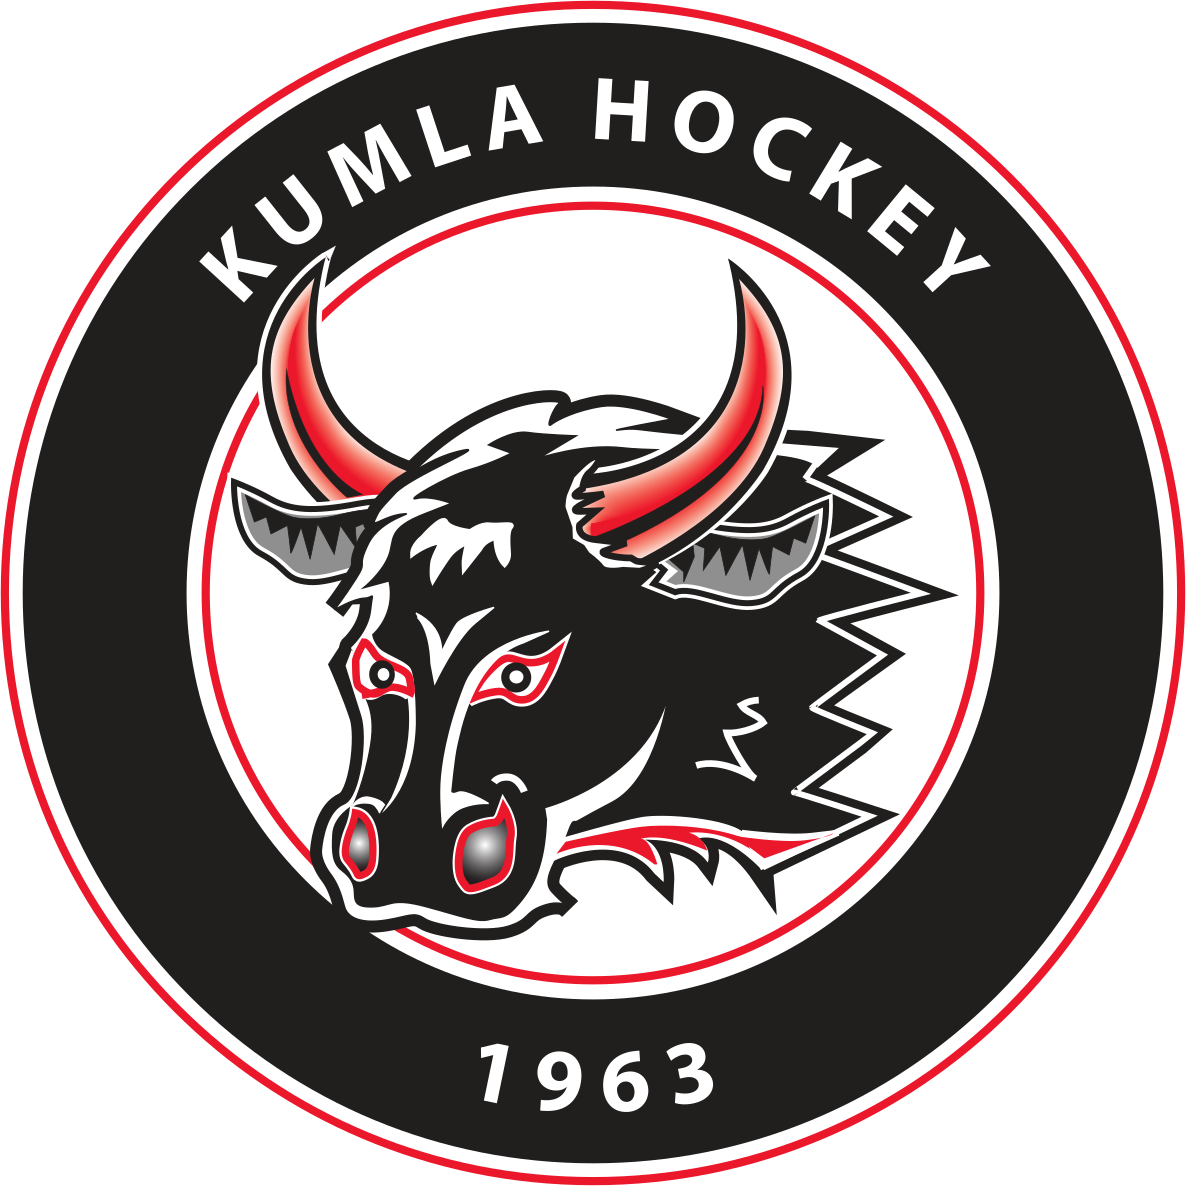 Kumla HC Black Bulls